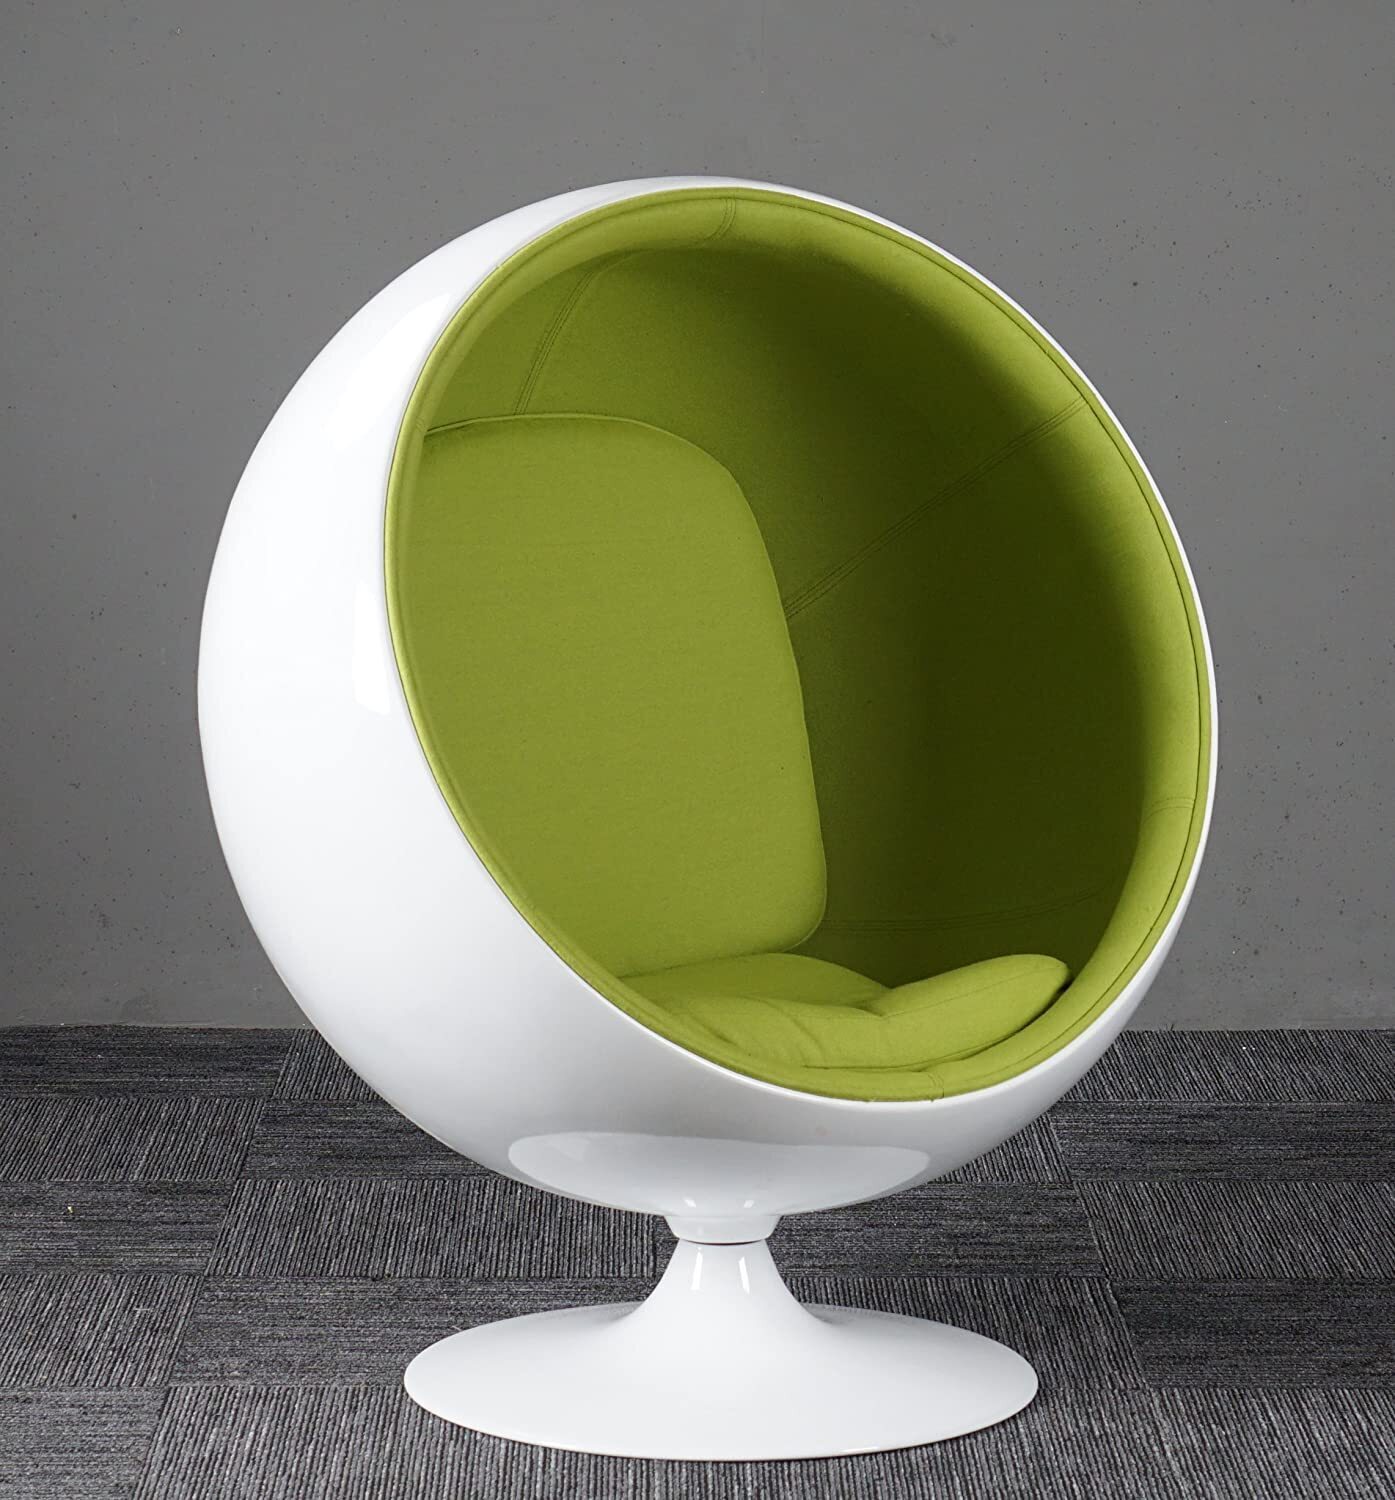 Living Room Ball Style Fiberglass Chair